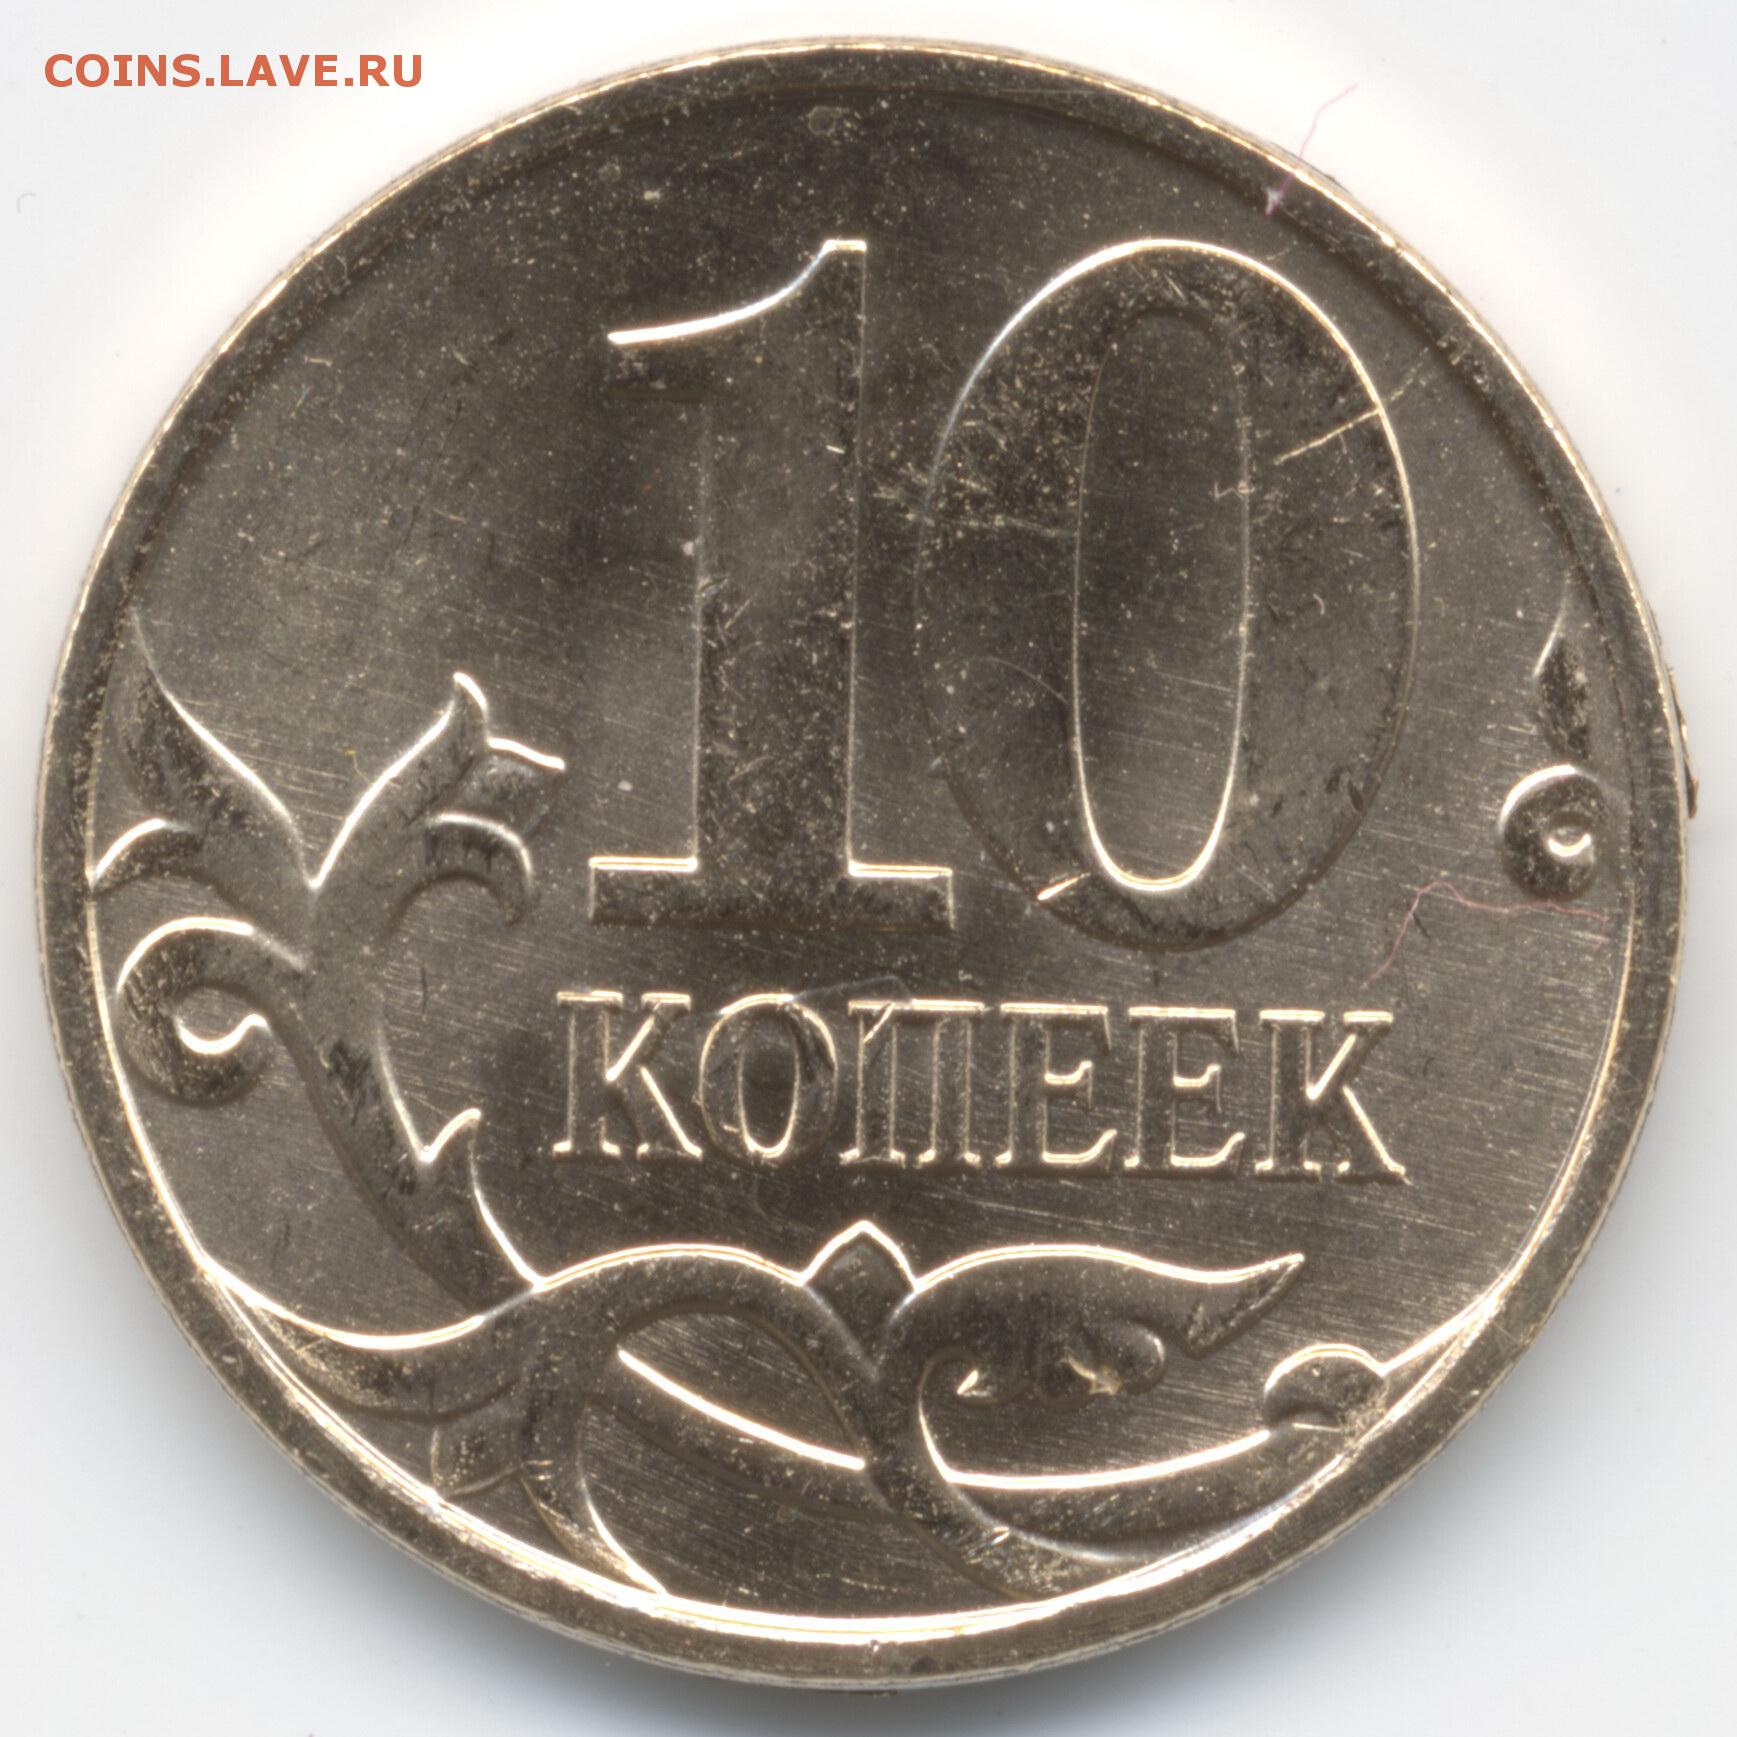 Копейка 10 монетная. Монета 10 копеек. Копеечная монета. Российские монеты. Русские монеты.